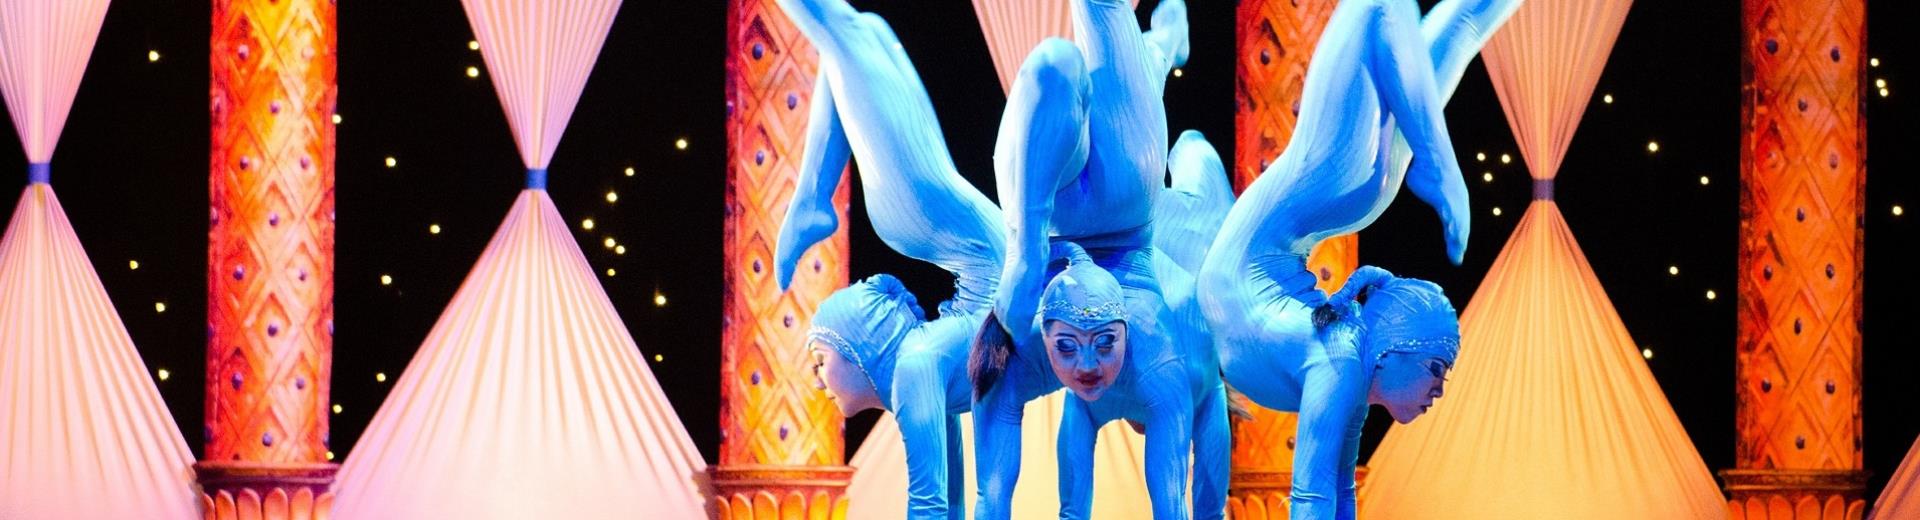 Prenota il BW Crystal Palace Hotel 4 stelle per le Cirque du Soleil a Torino